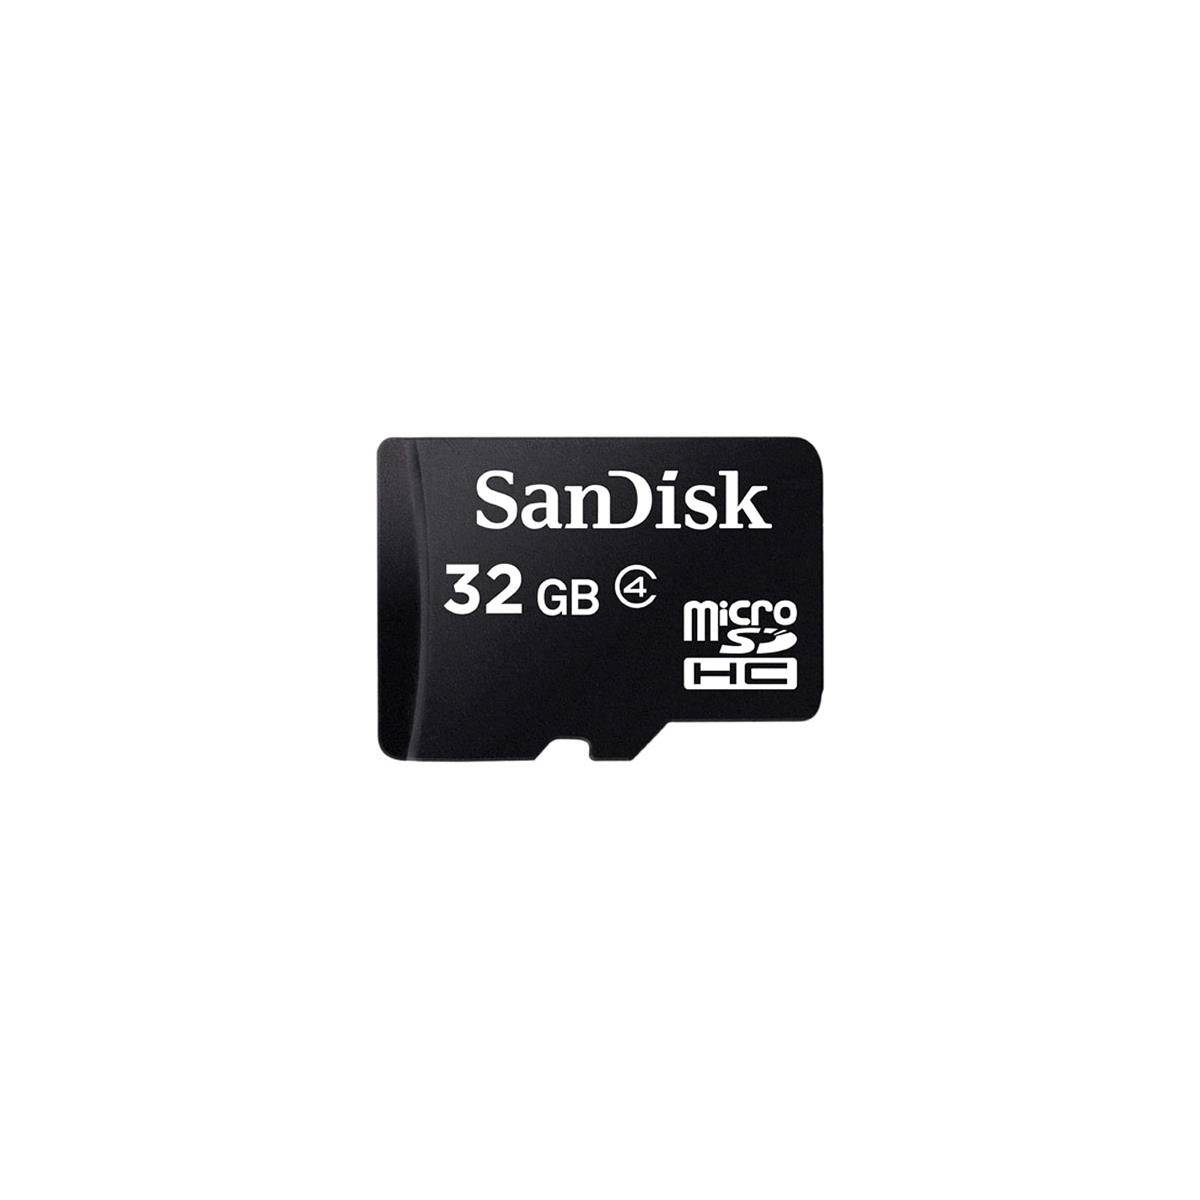 Image of SanDisk 32GB microSDHC Memory Card